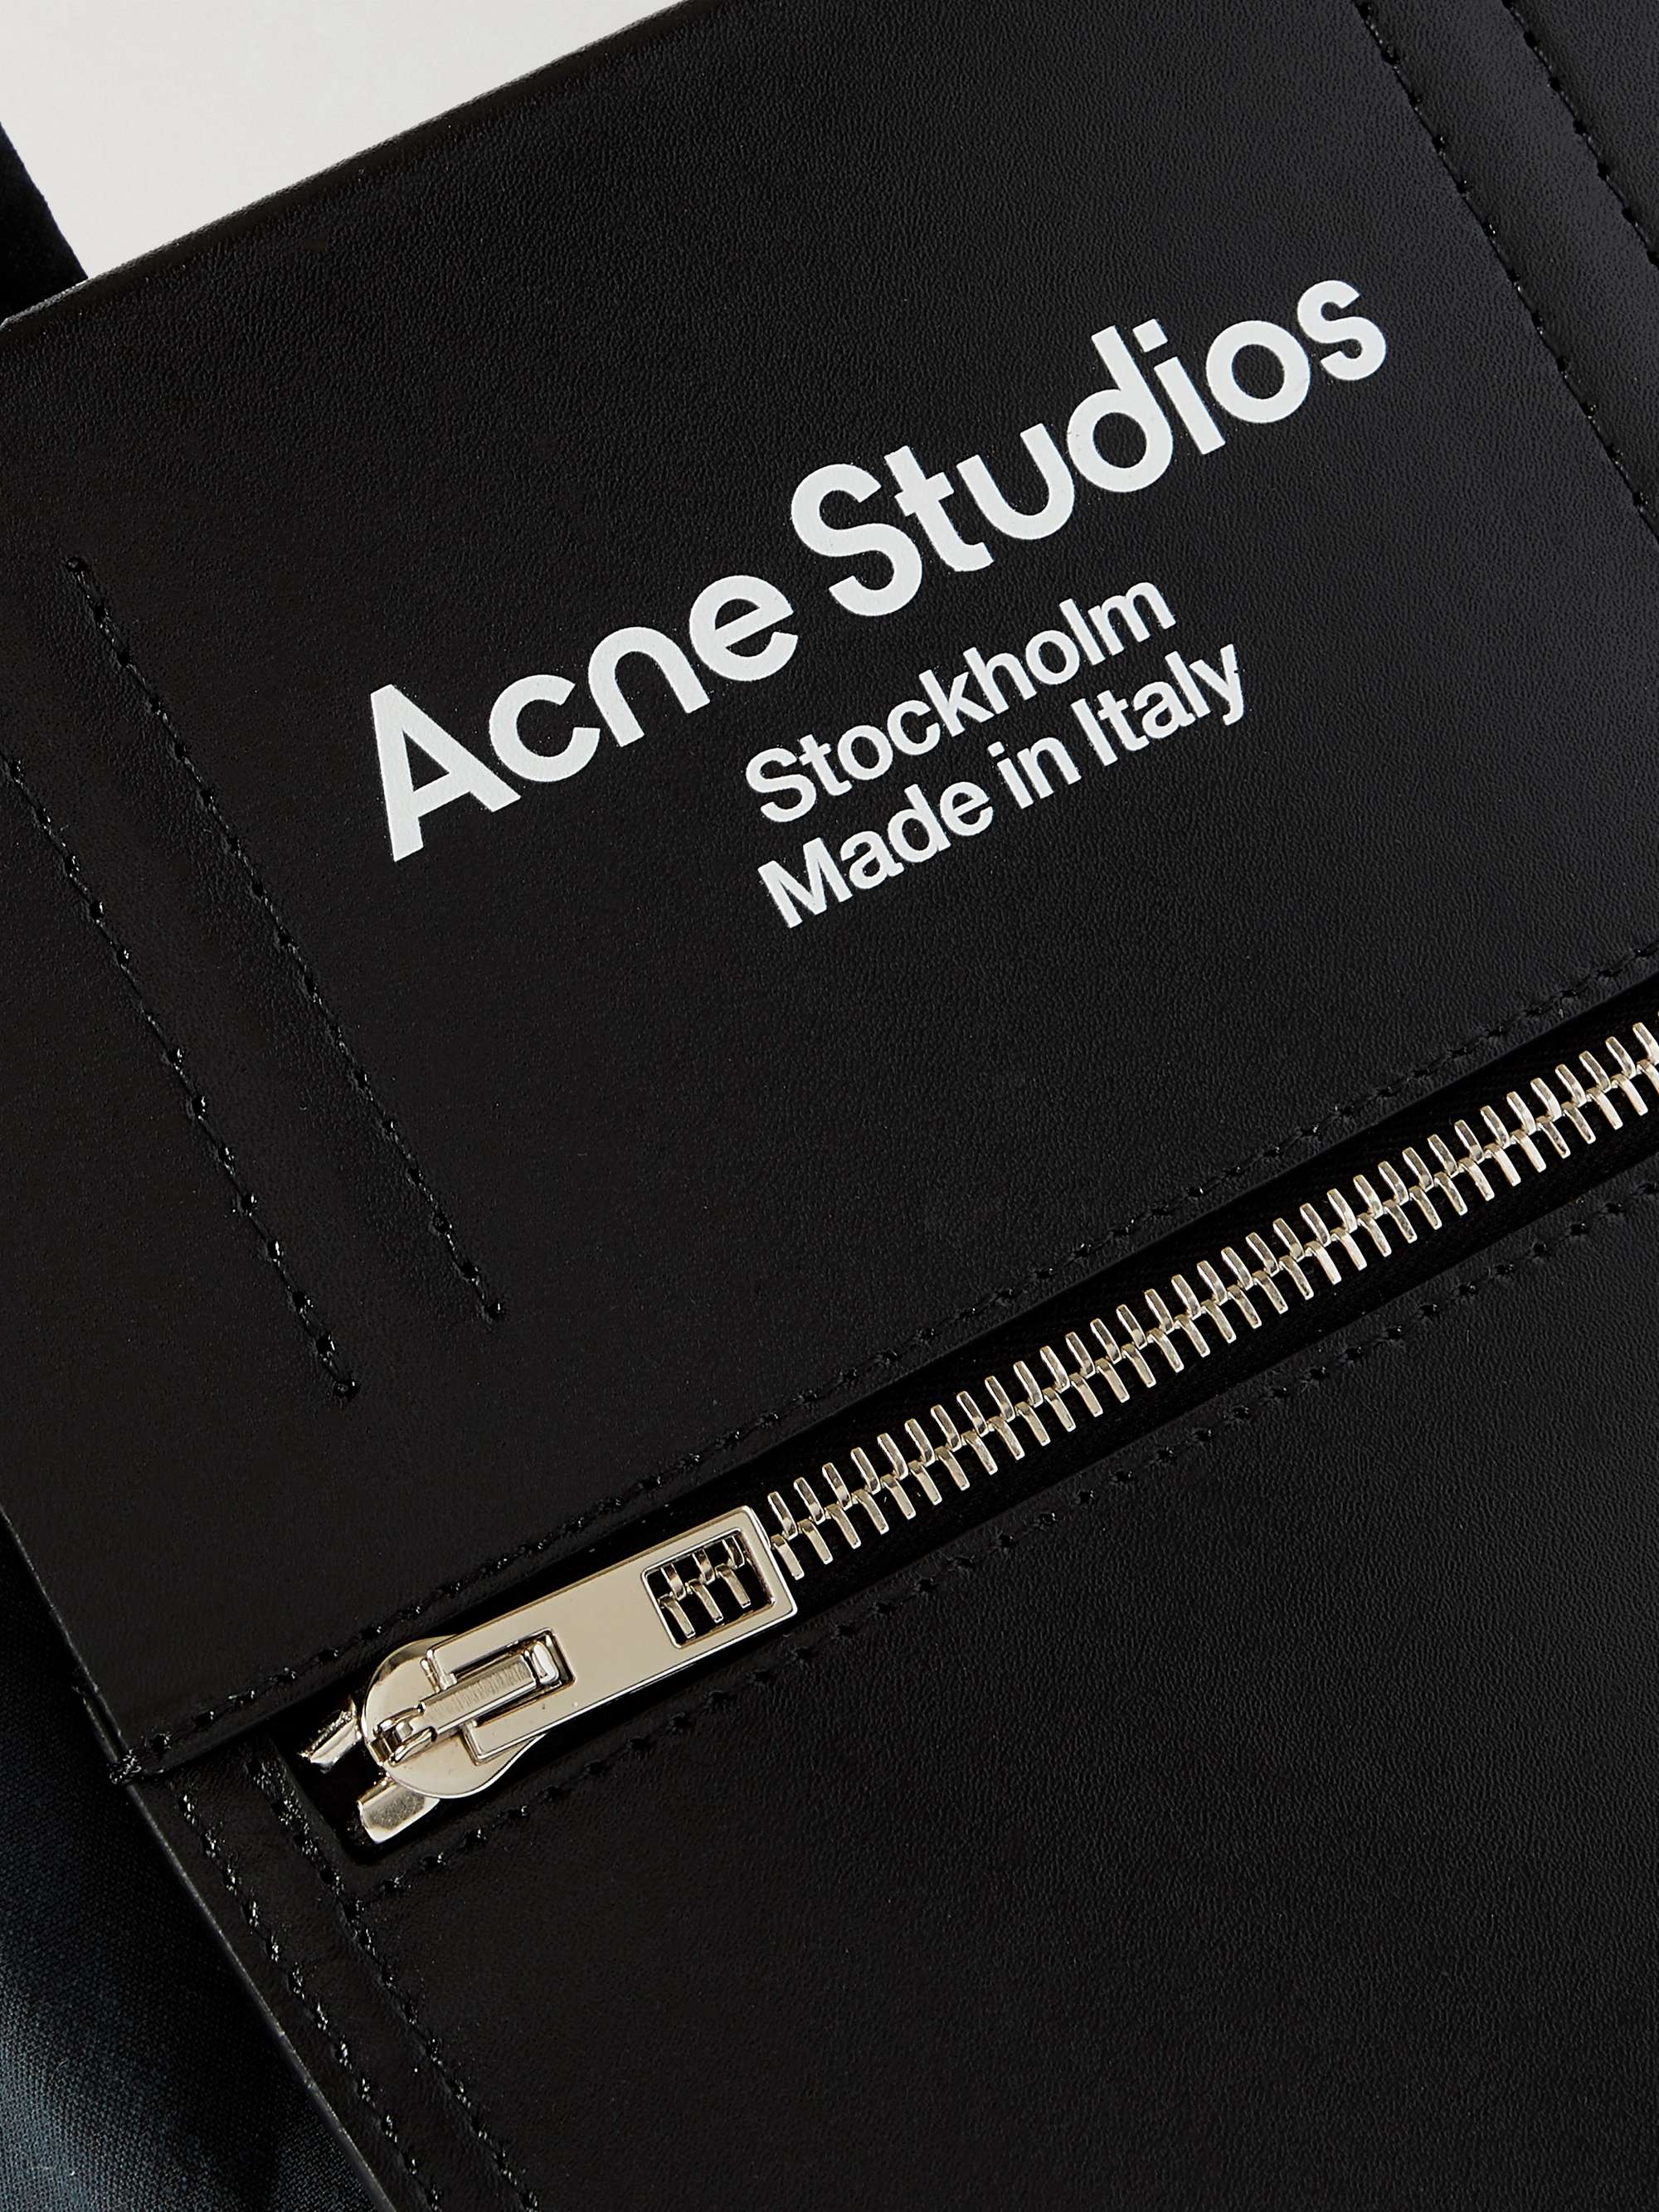 ACNE STUDIOS Baker Out Mini Logo-Print Leather and Nylon Tote Bag